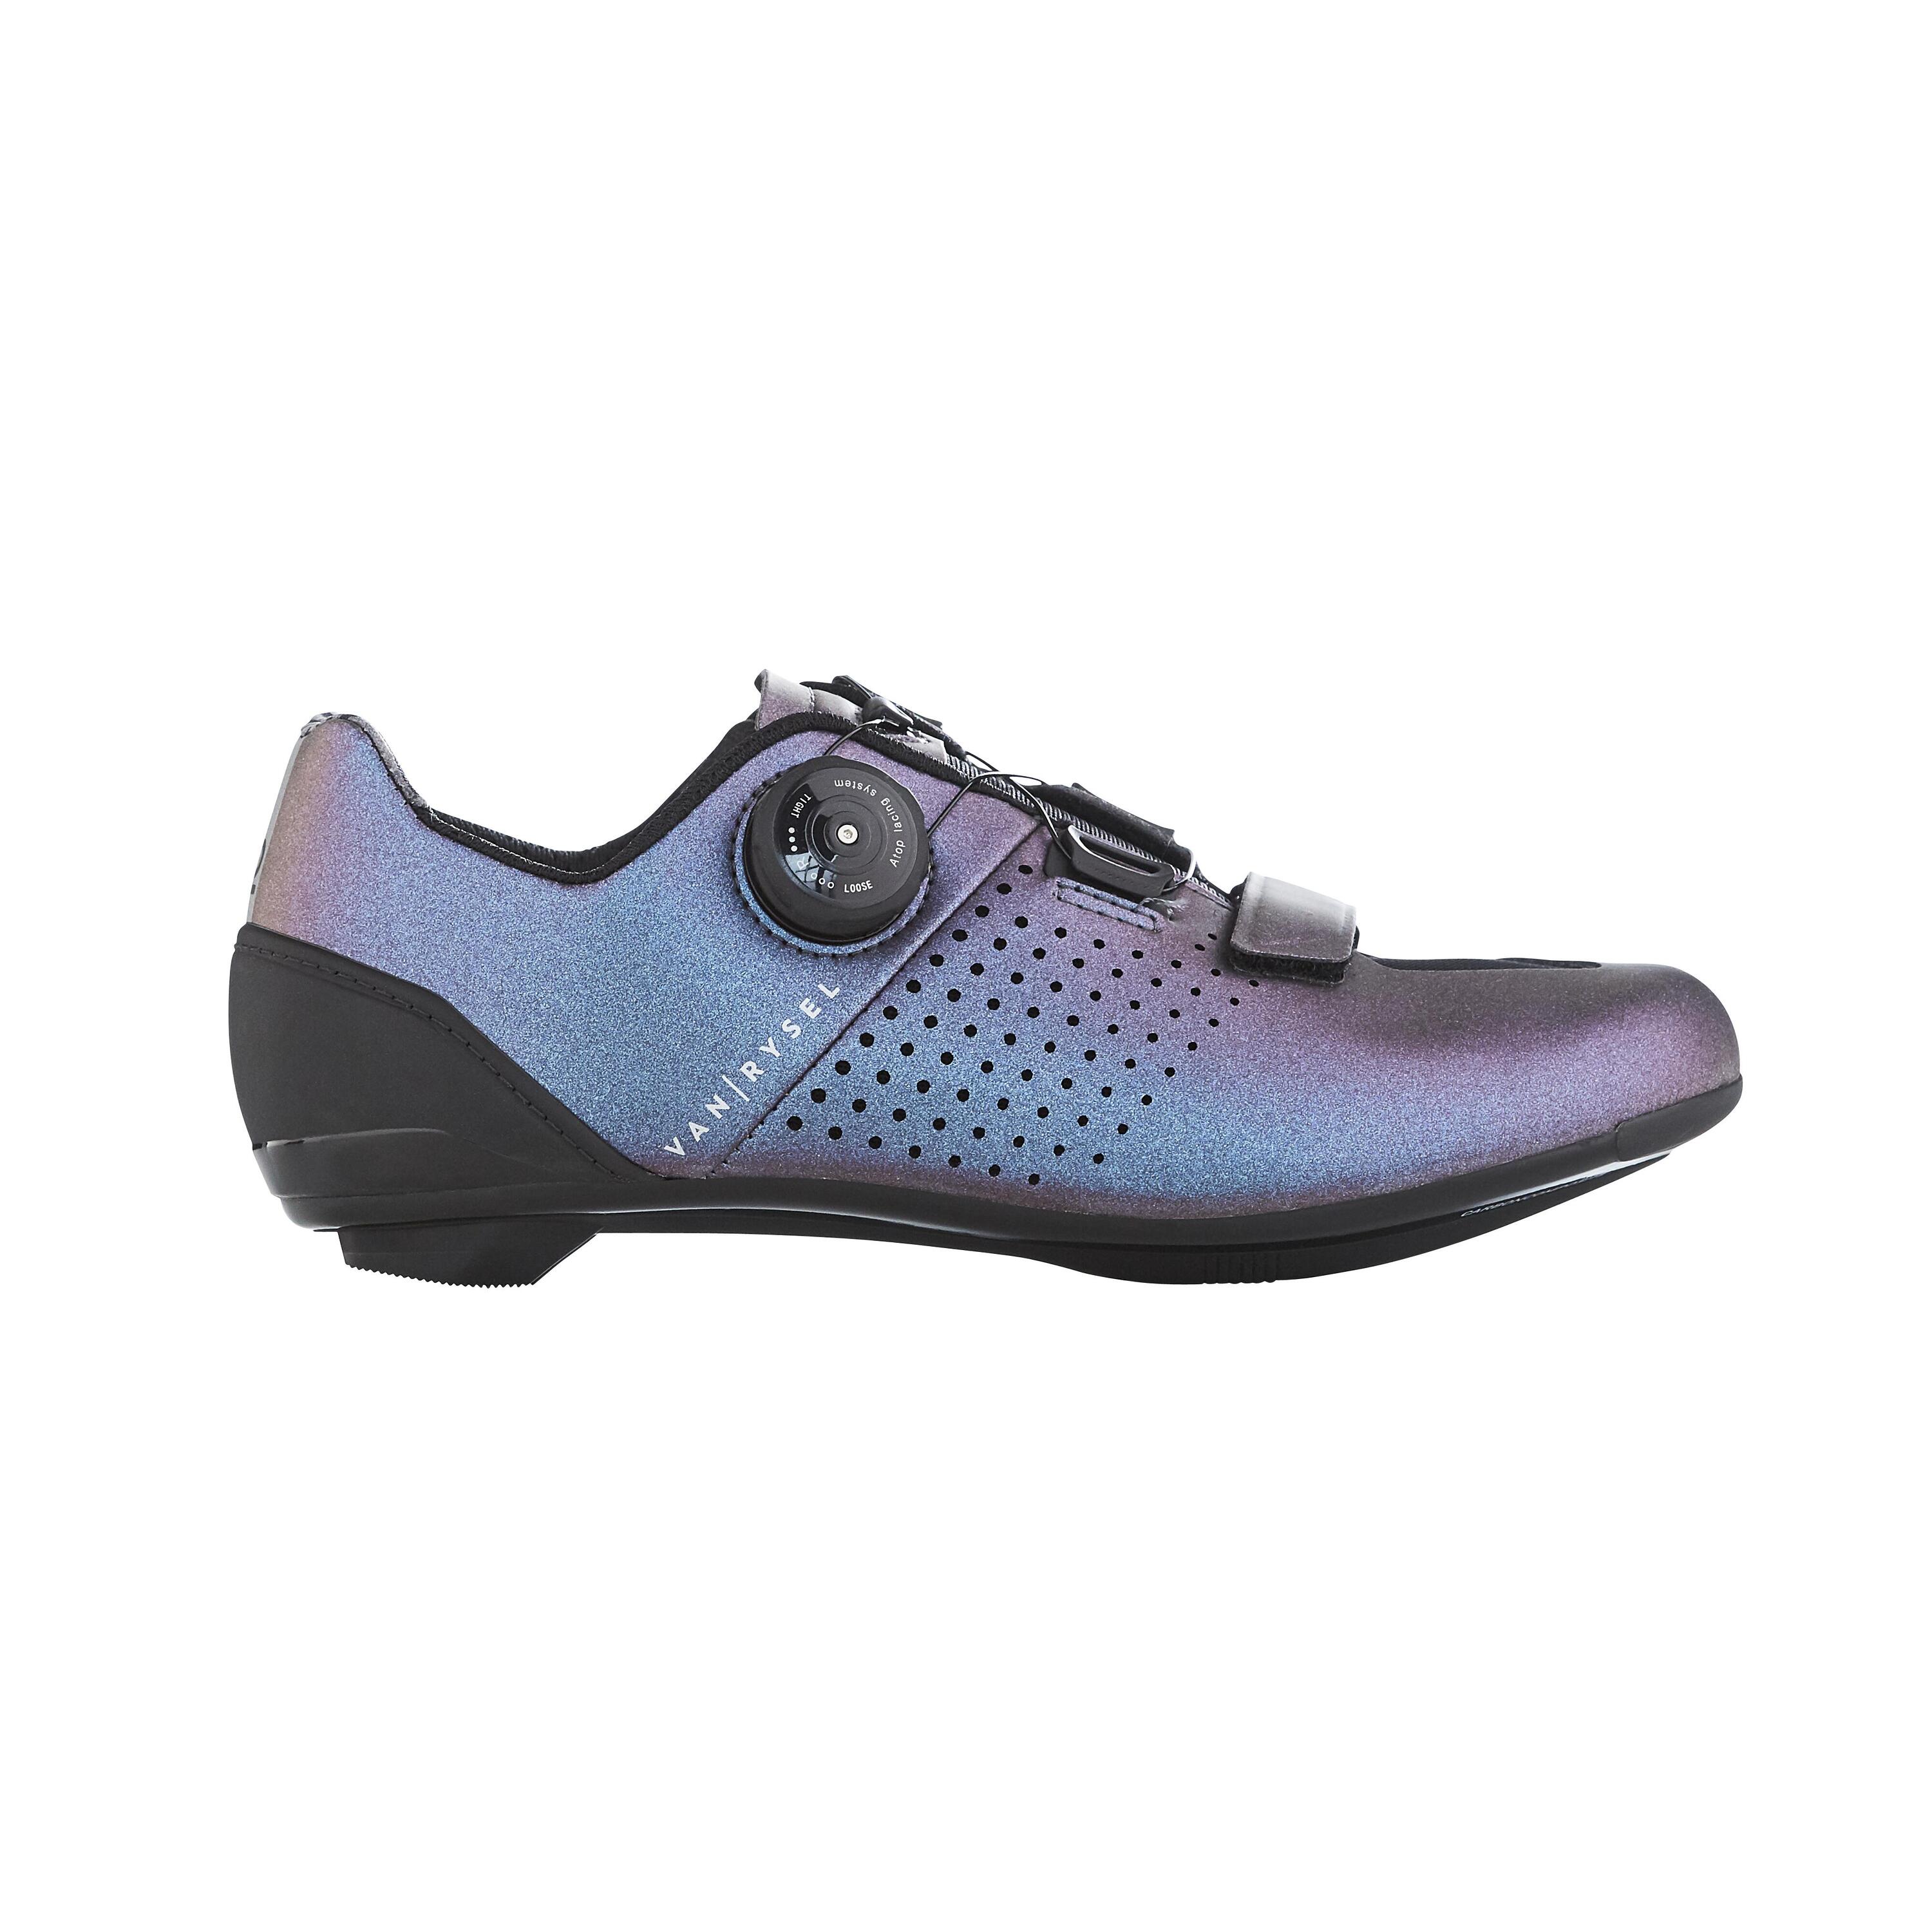 RoadR 520 Women's Carbon Road Cycling Shoes - Iridescent Purple 2/6